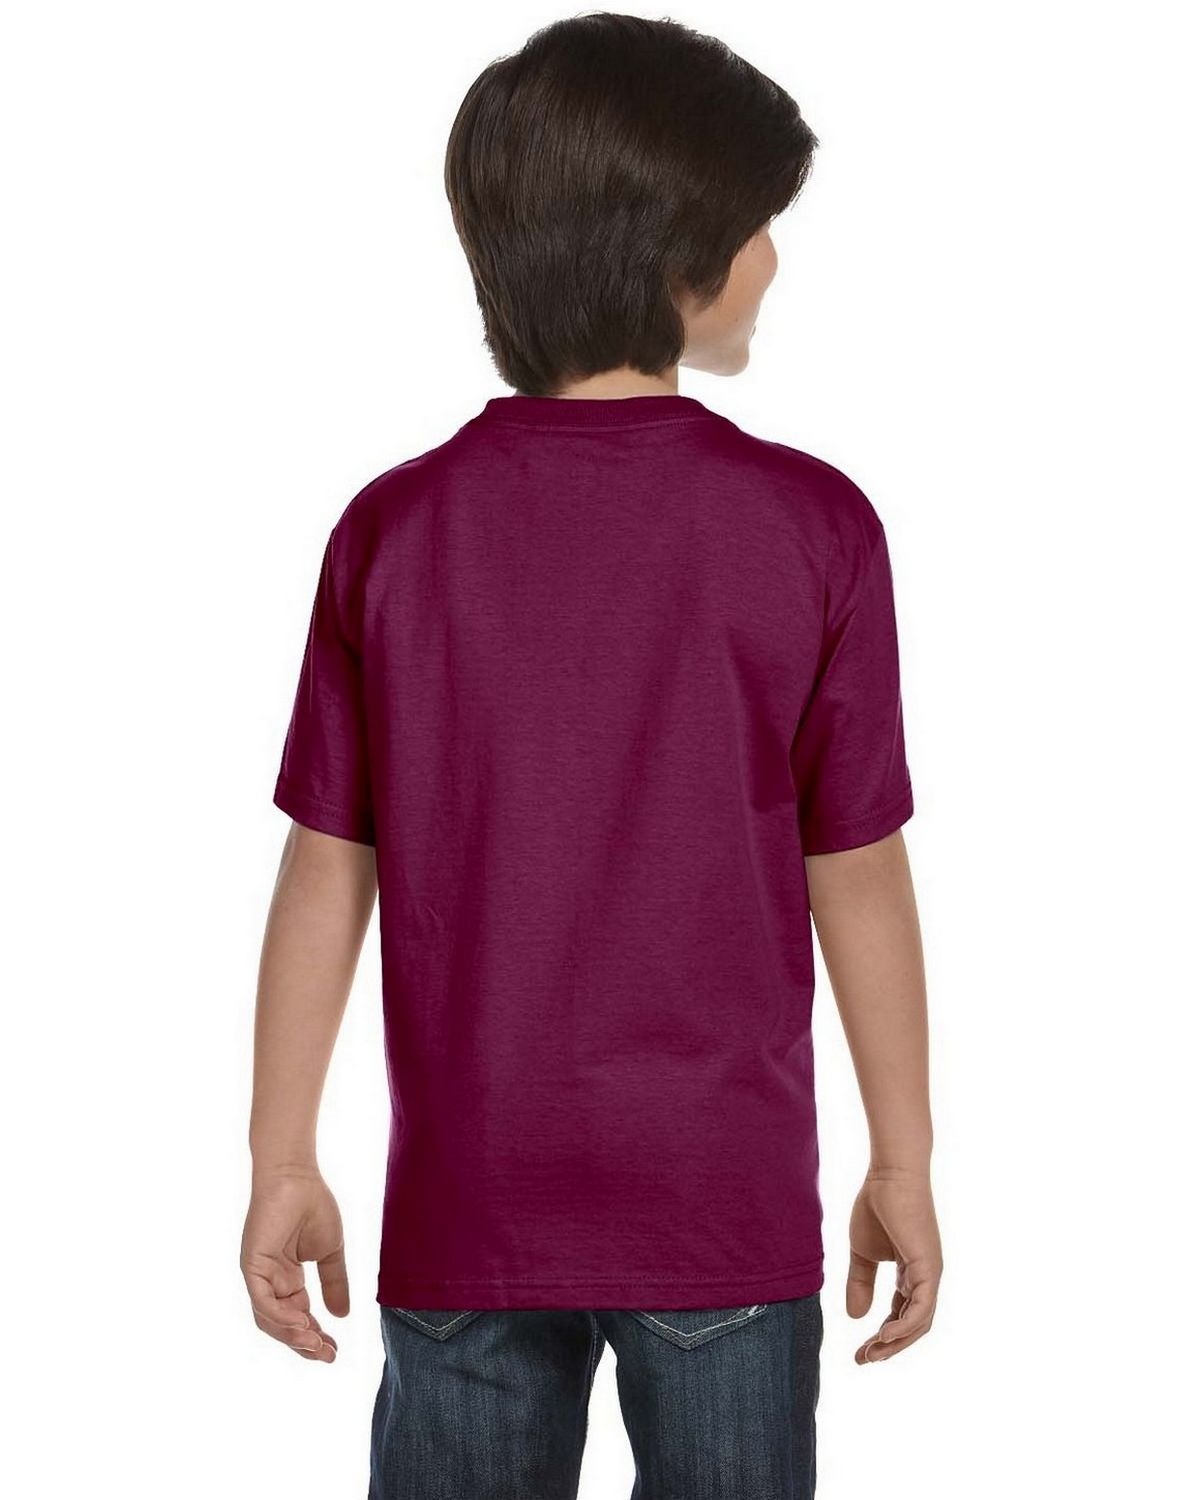 Hanes Youth Sweatshirt Size Chart